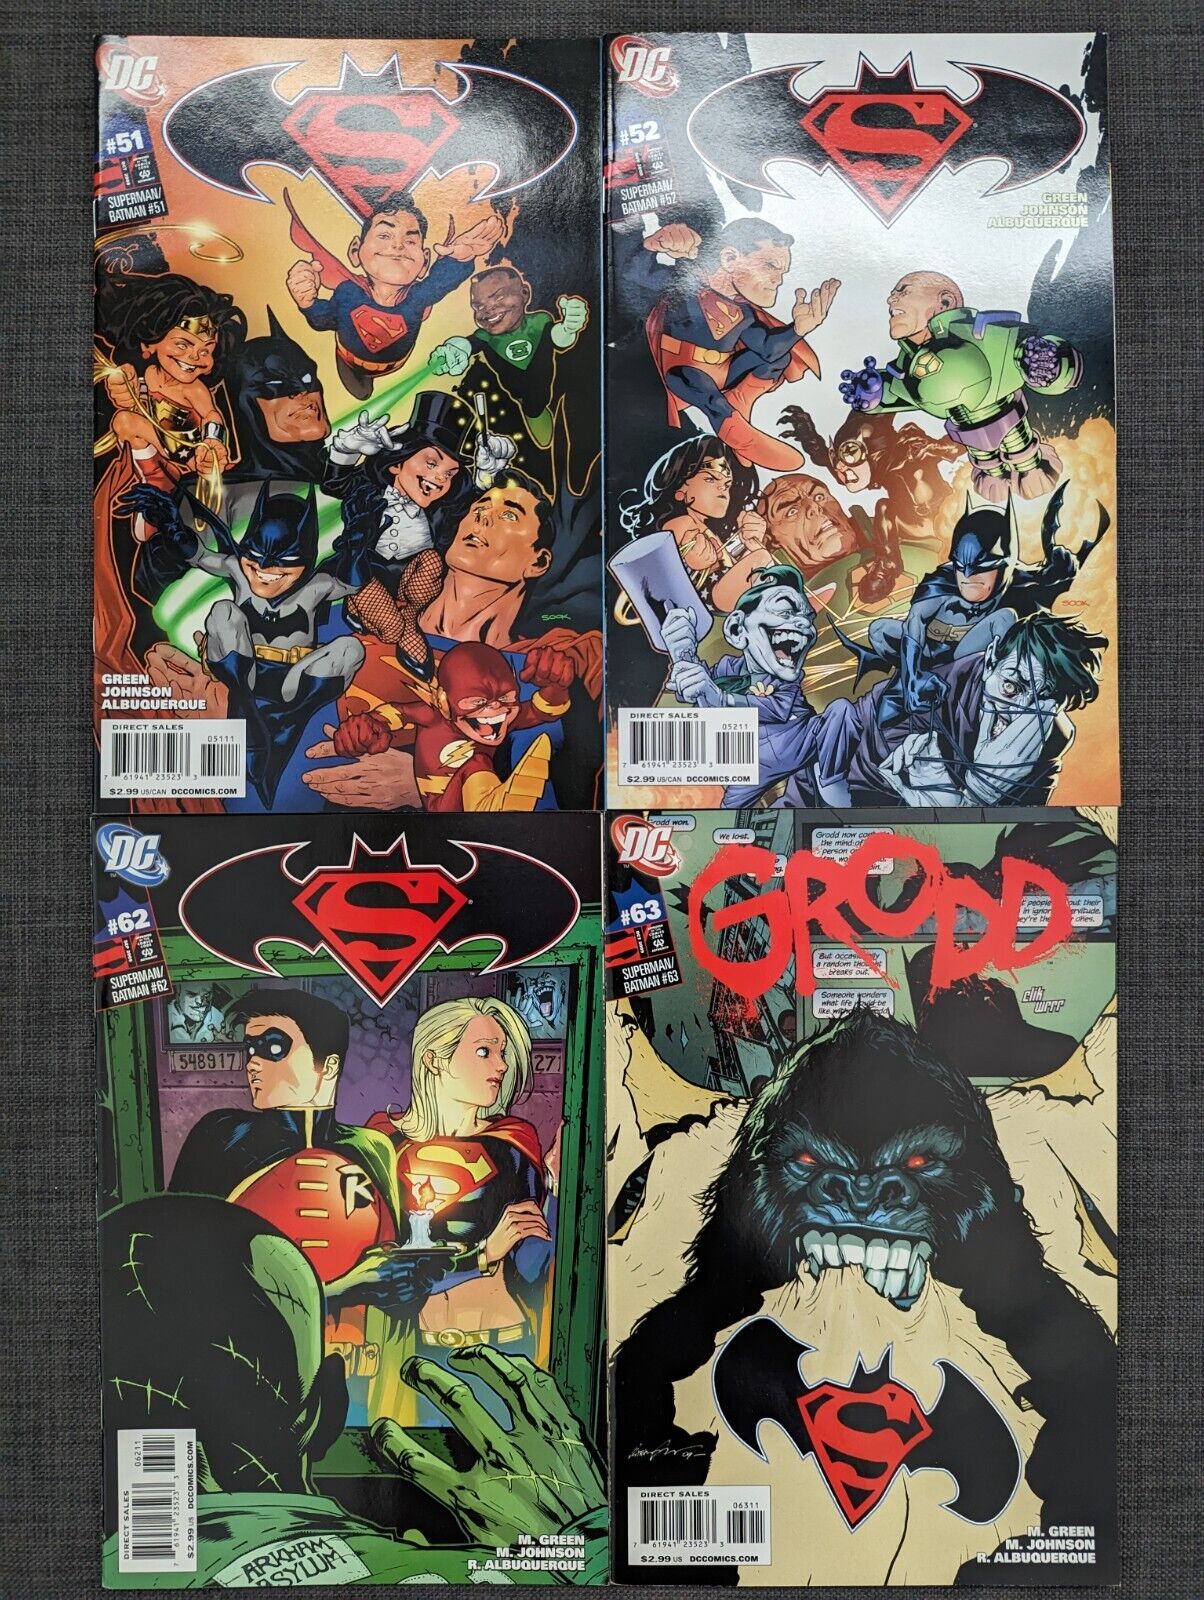 Superman Batman (2003) issues 51-52 and 62-63 by Rafael Albuquerque